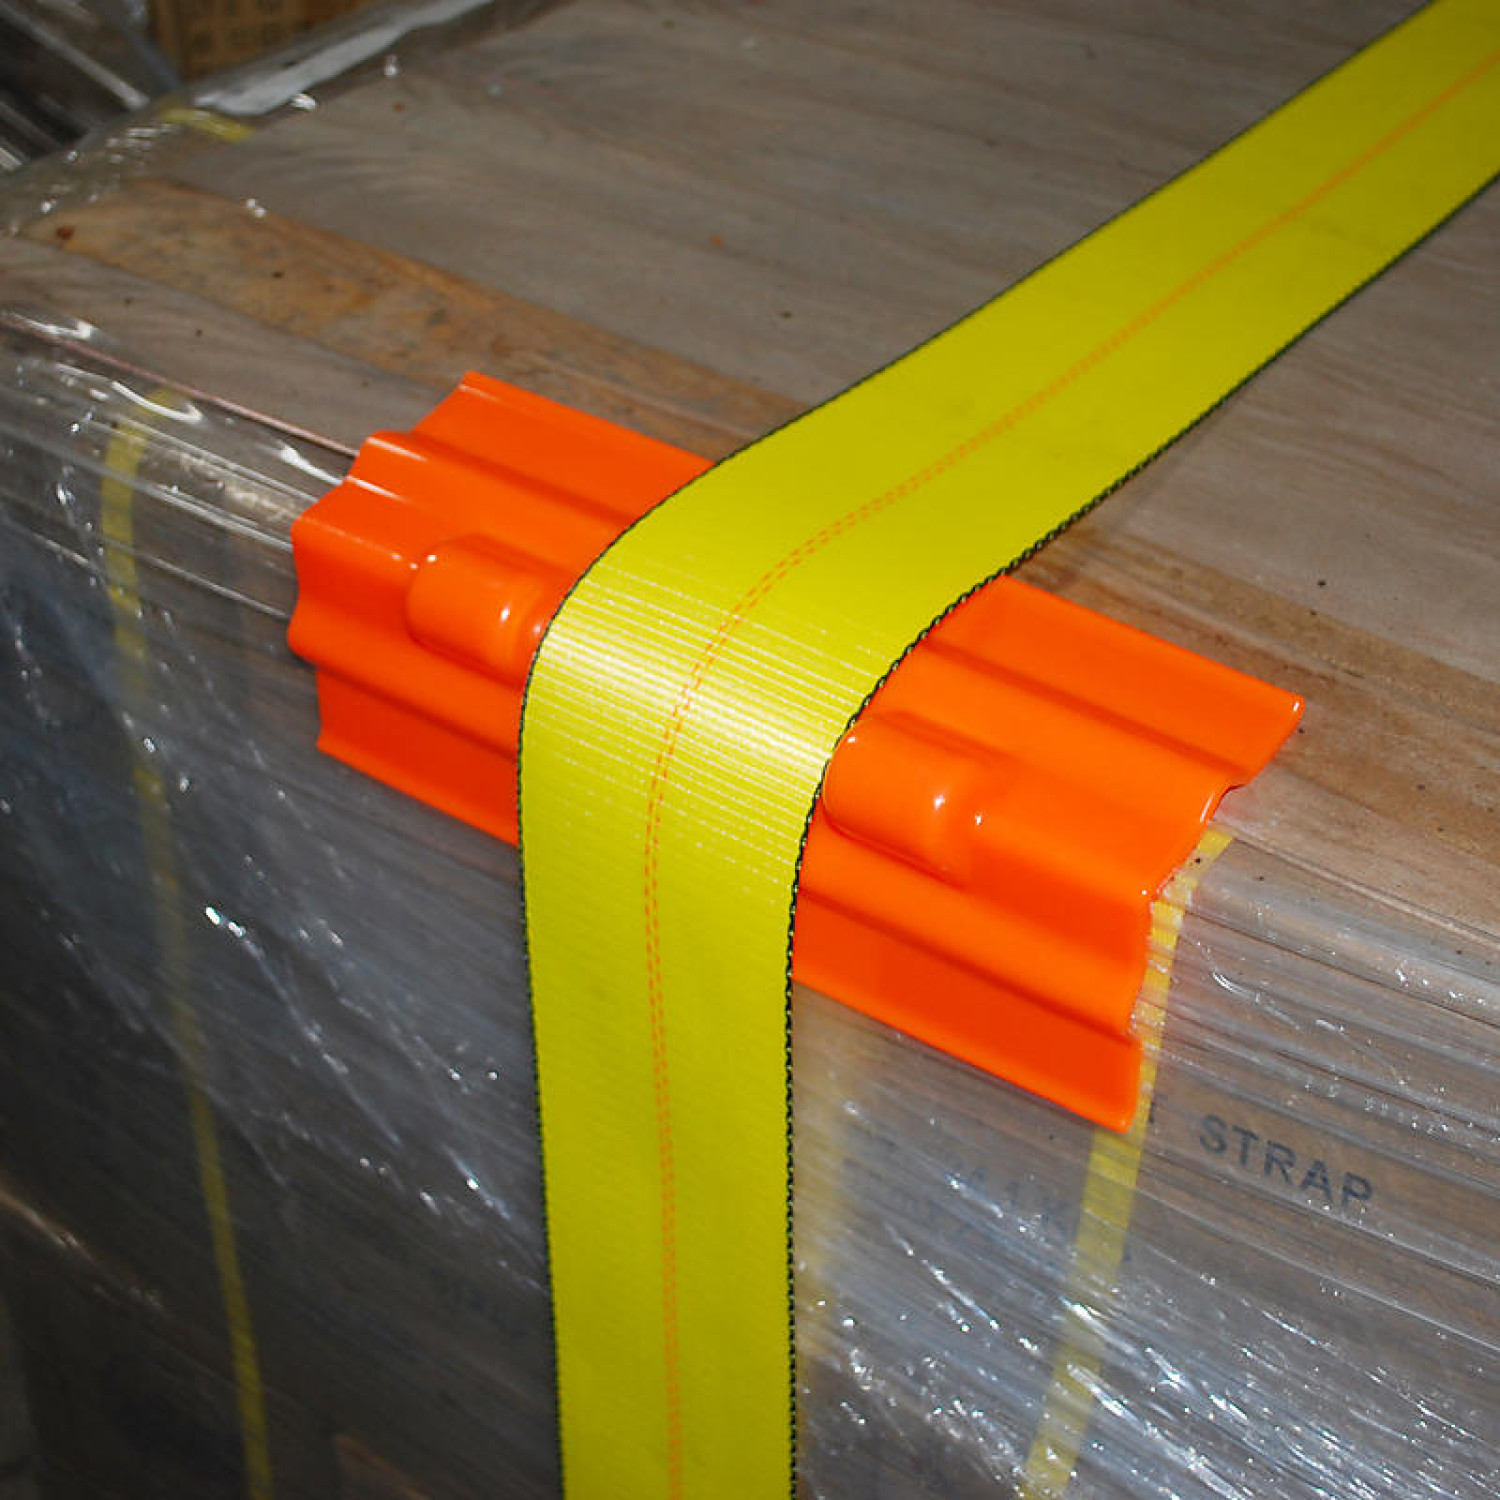 4 x 4 Heavy Duty Edge Protectors for Lashing, High Density Polyethylene  buy in stock in U.S. in IDL Packaging